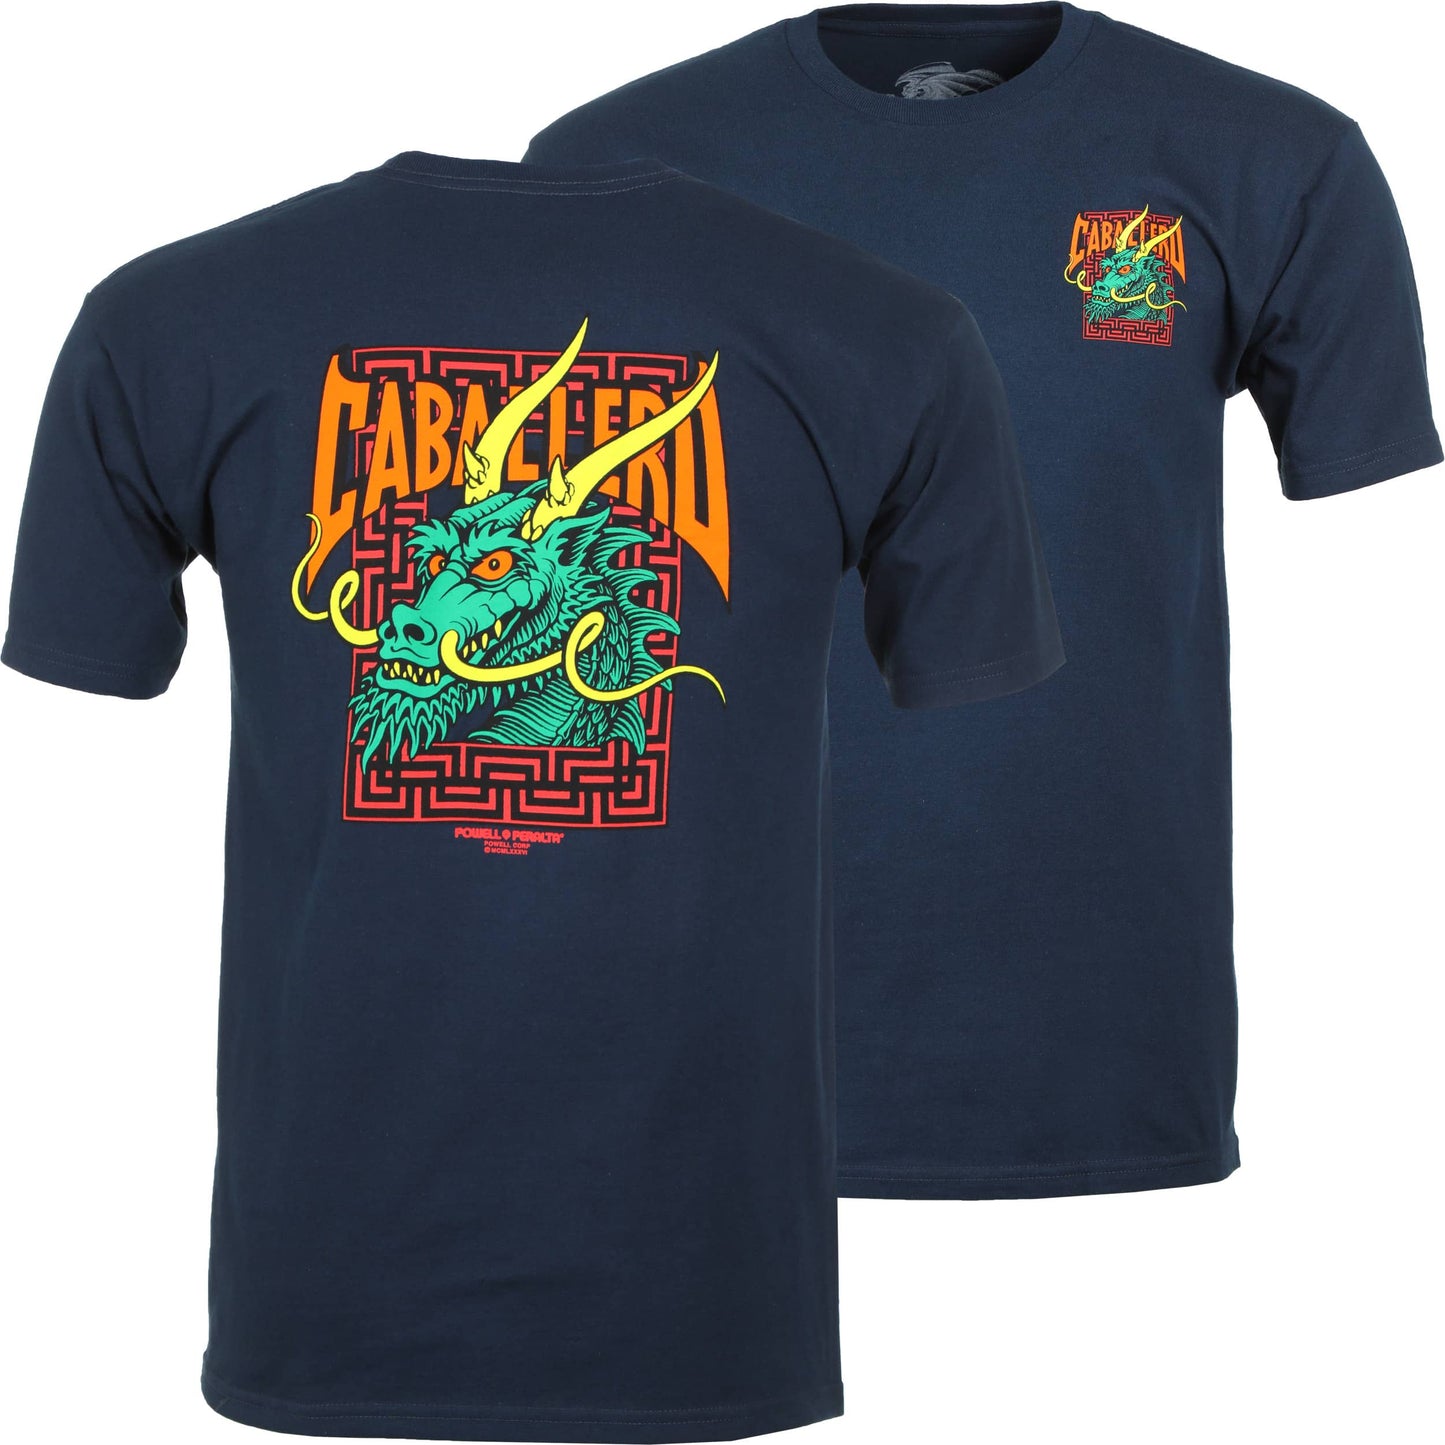 Powell Peralta Caballero Street Dragon T-Shirt Navy